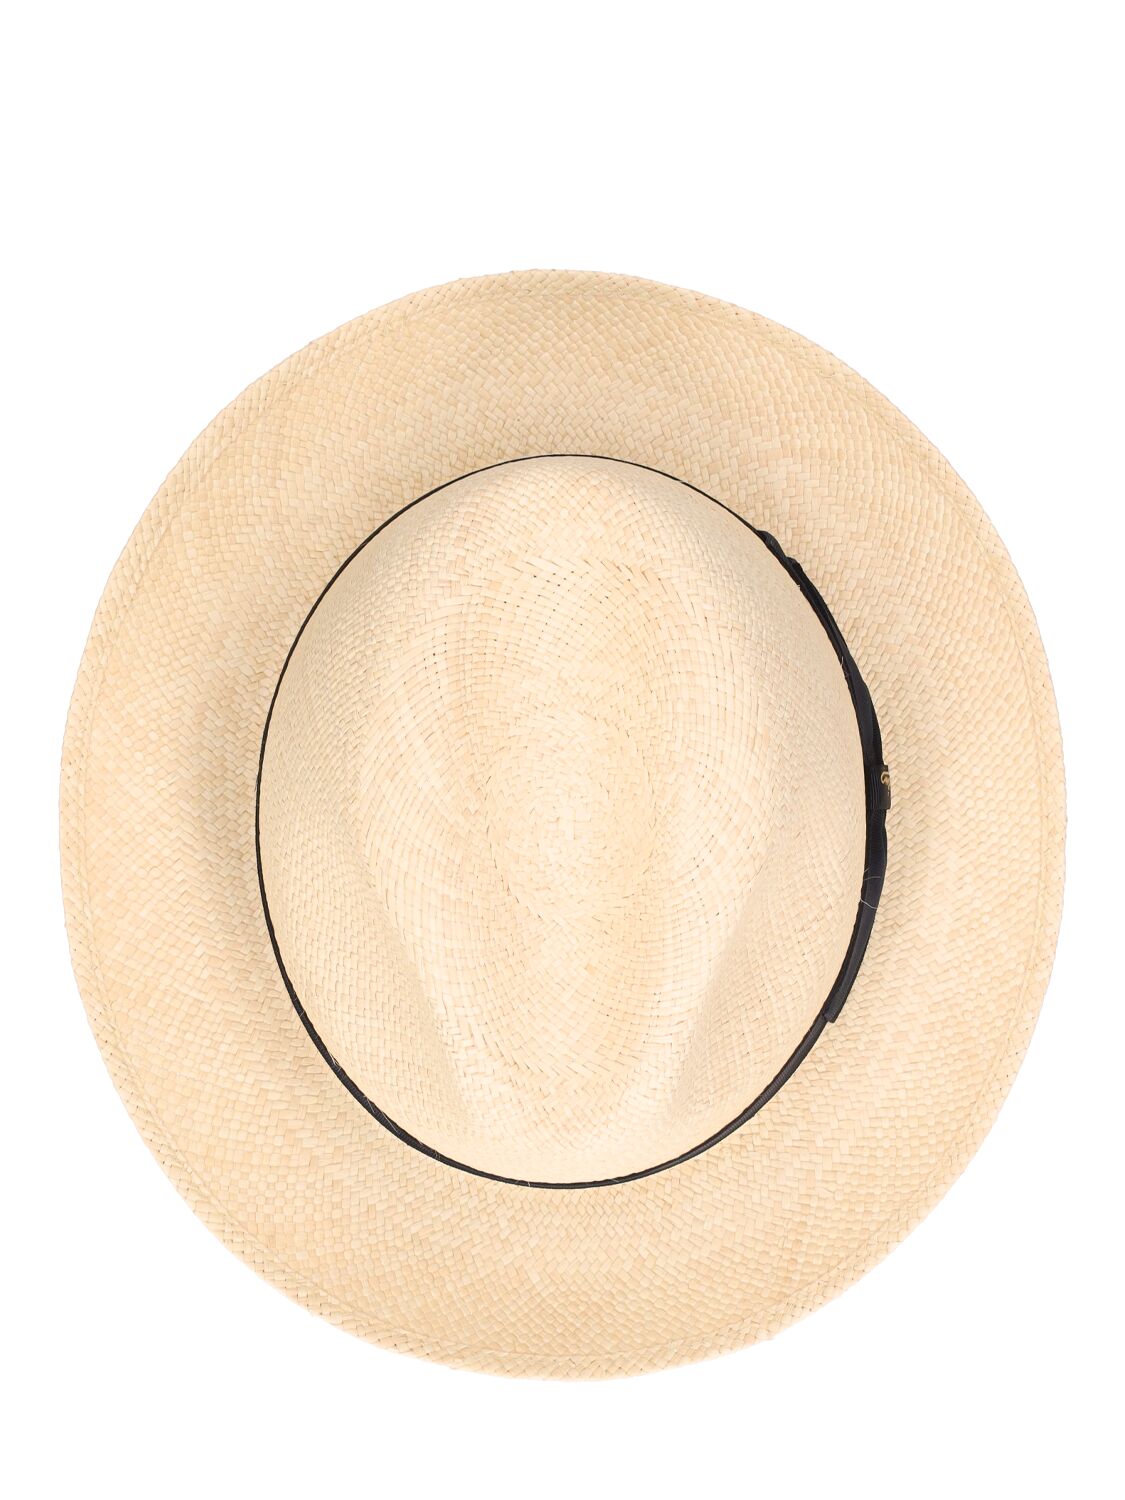 Shop Borsalino Federico 6cm Brim Straw Panama Hat In Natural,black